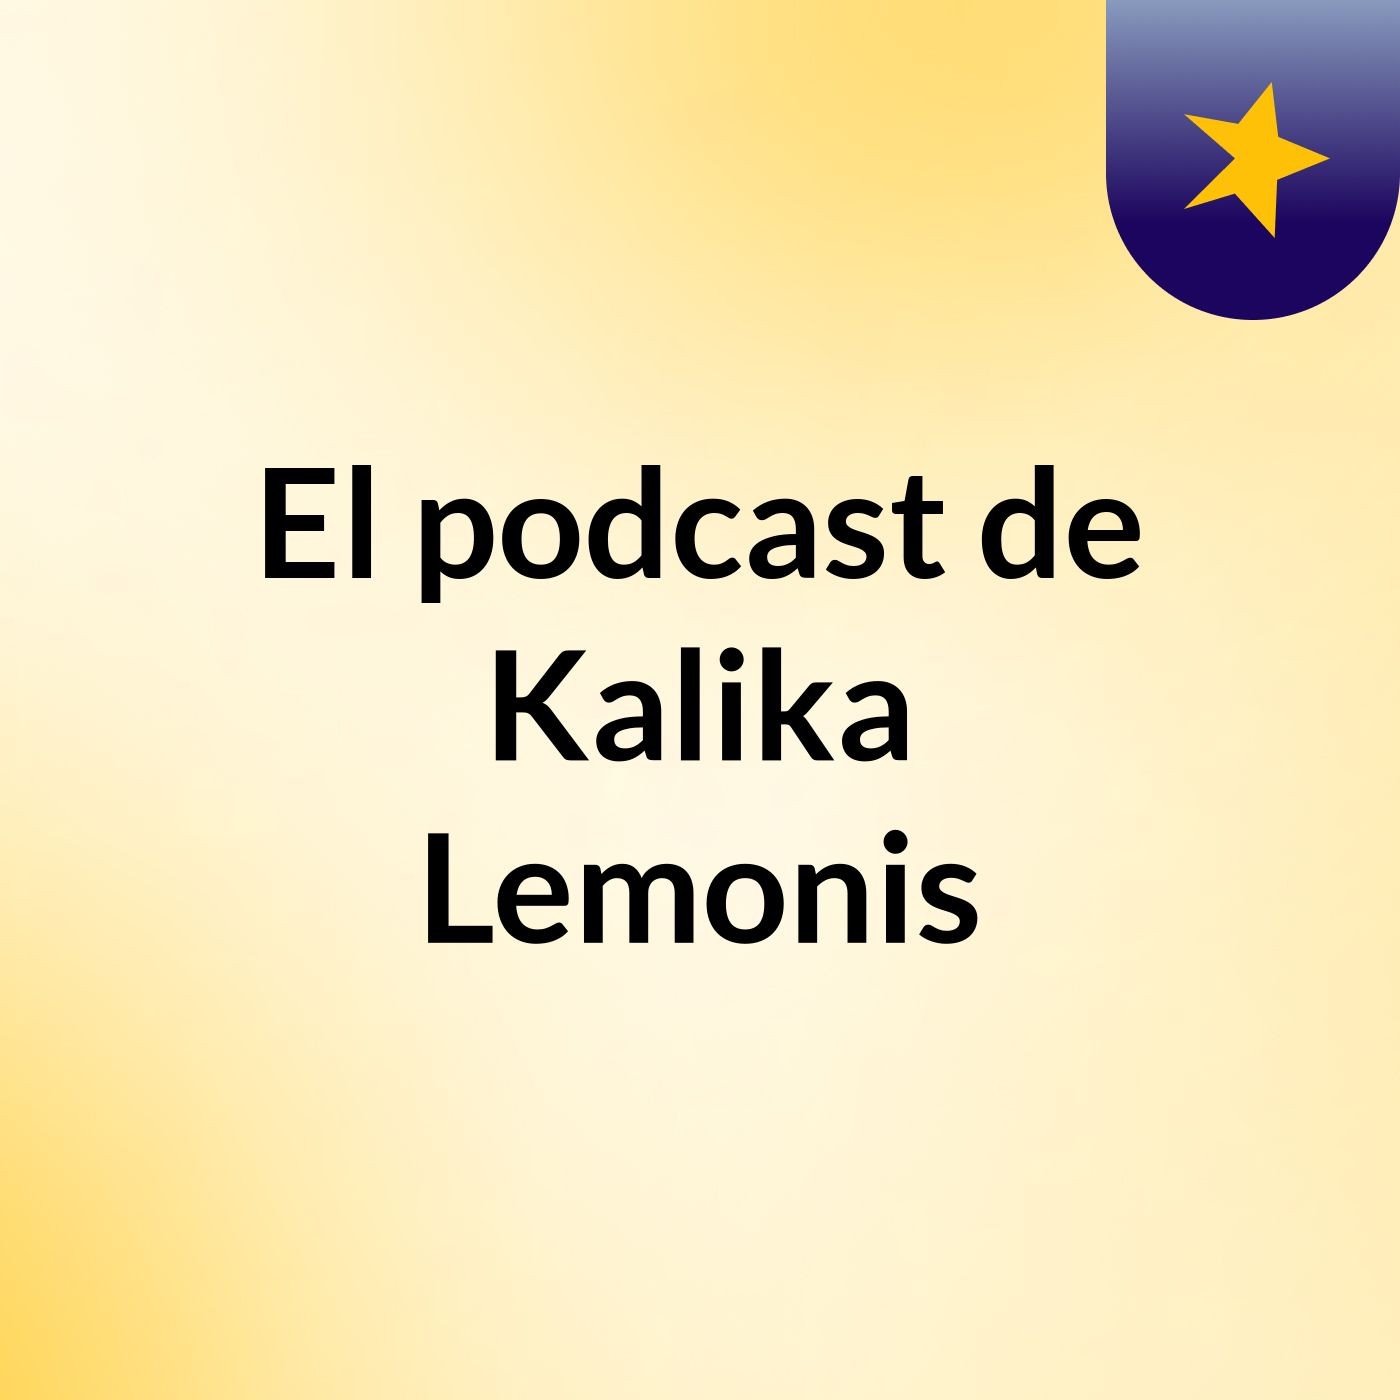 El podcast de Kalika Lemonis